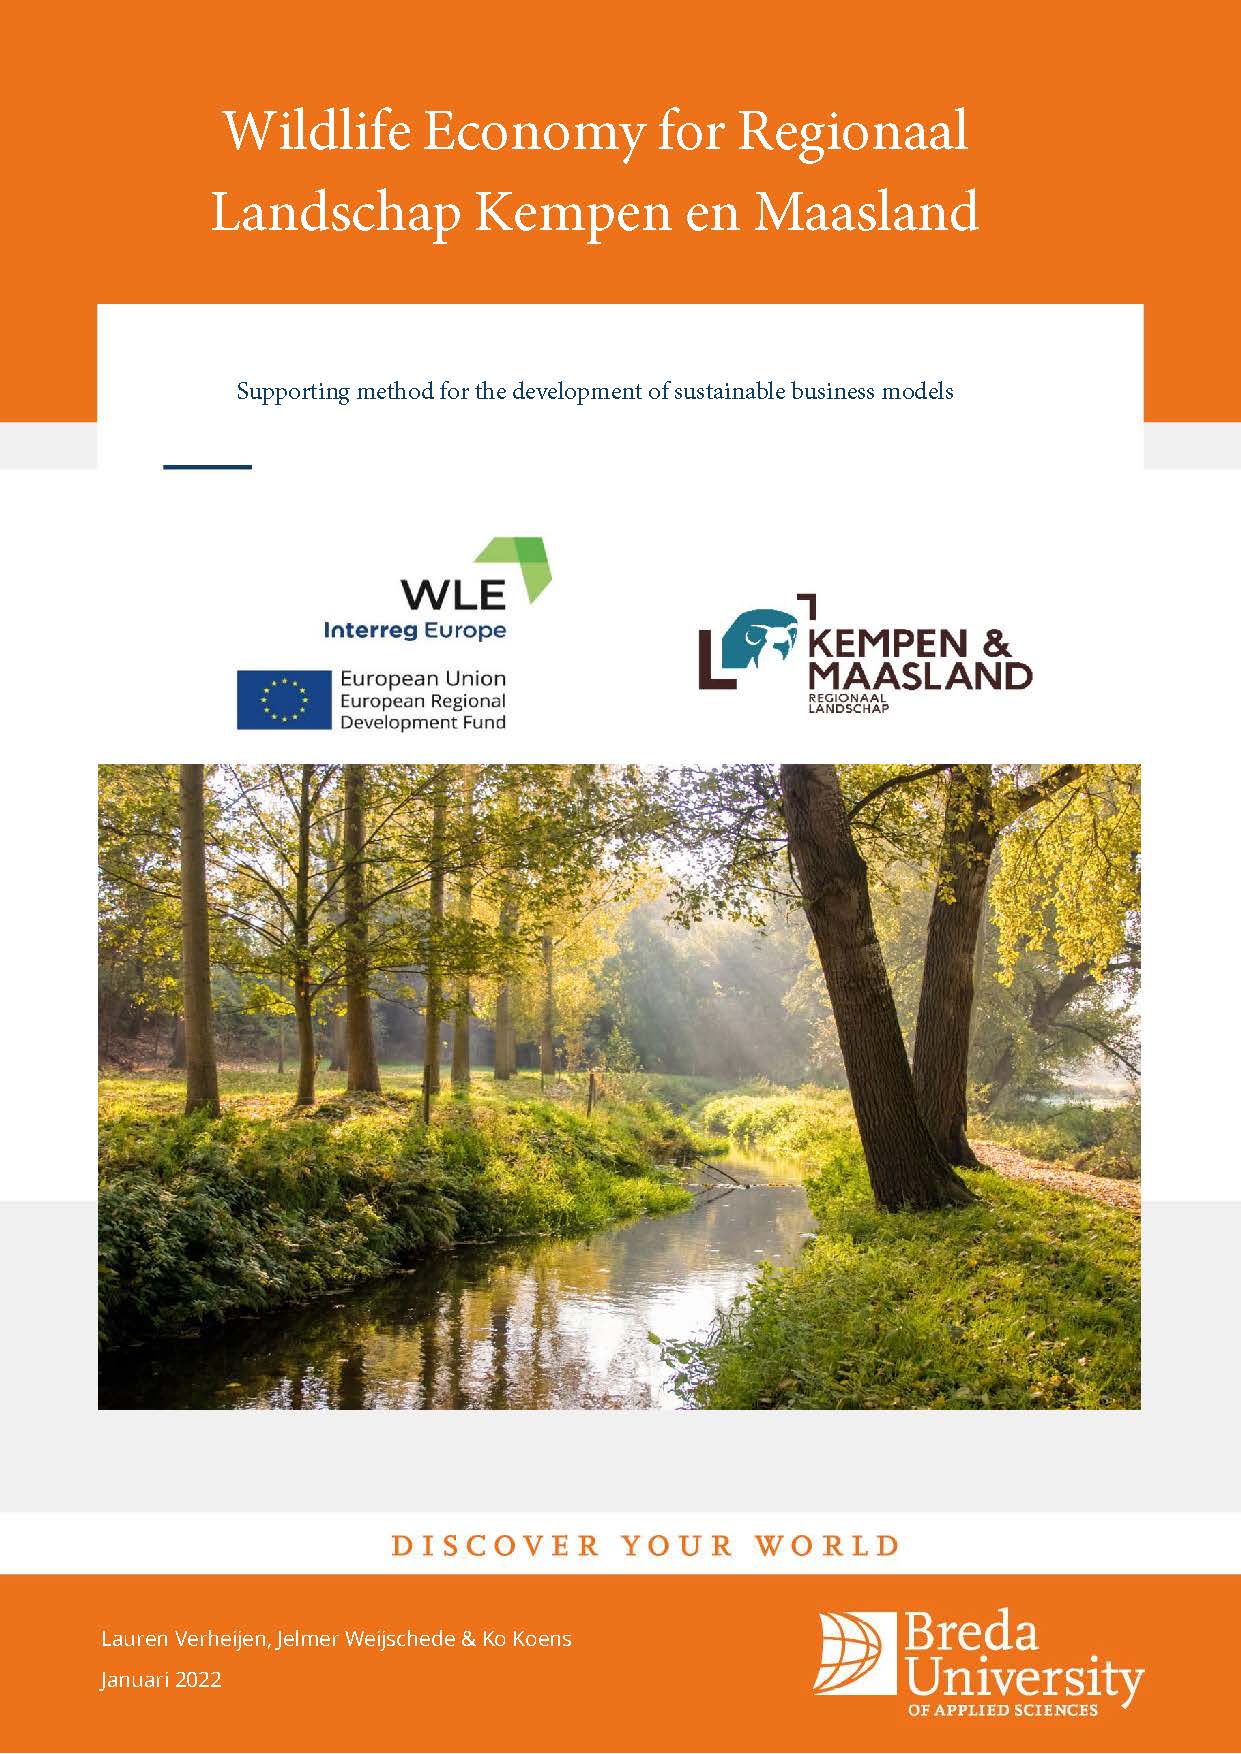 WLE sustainable business models Kempen en Maasland